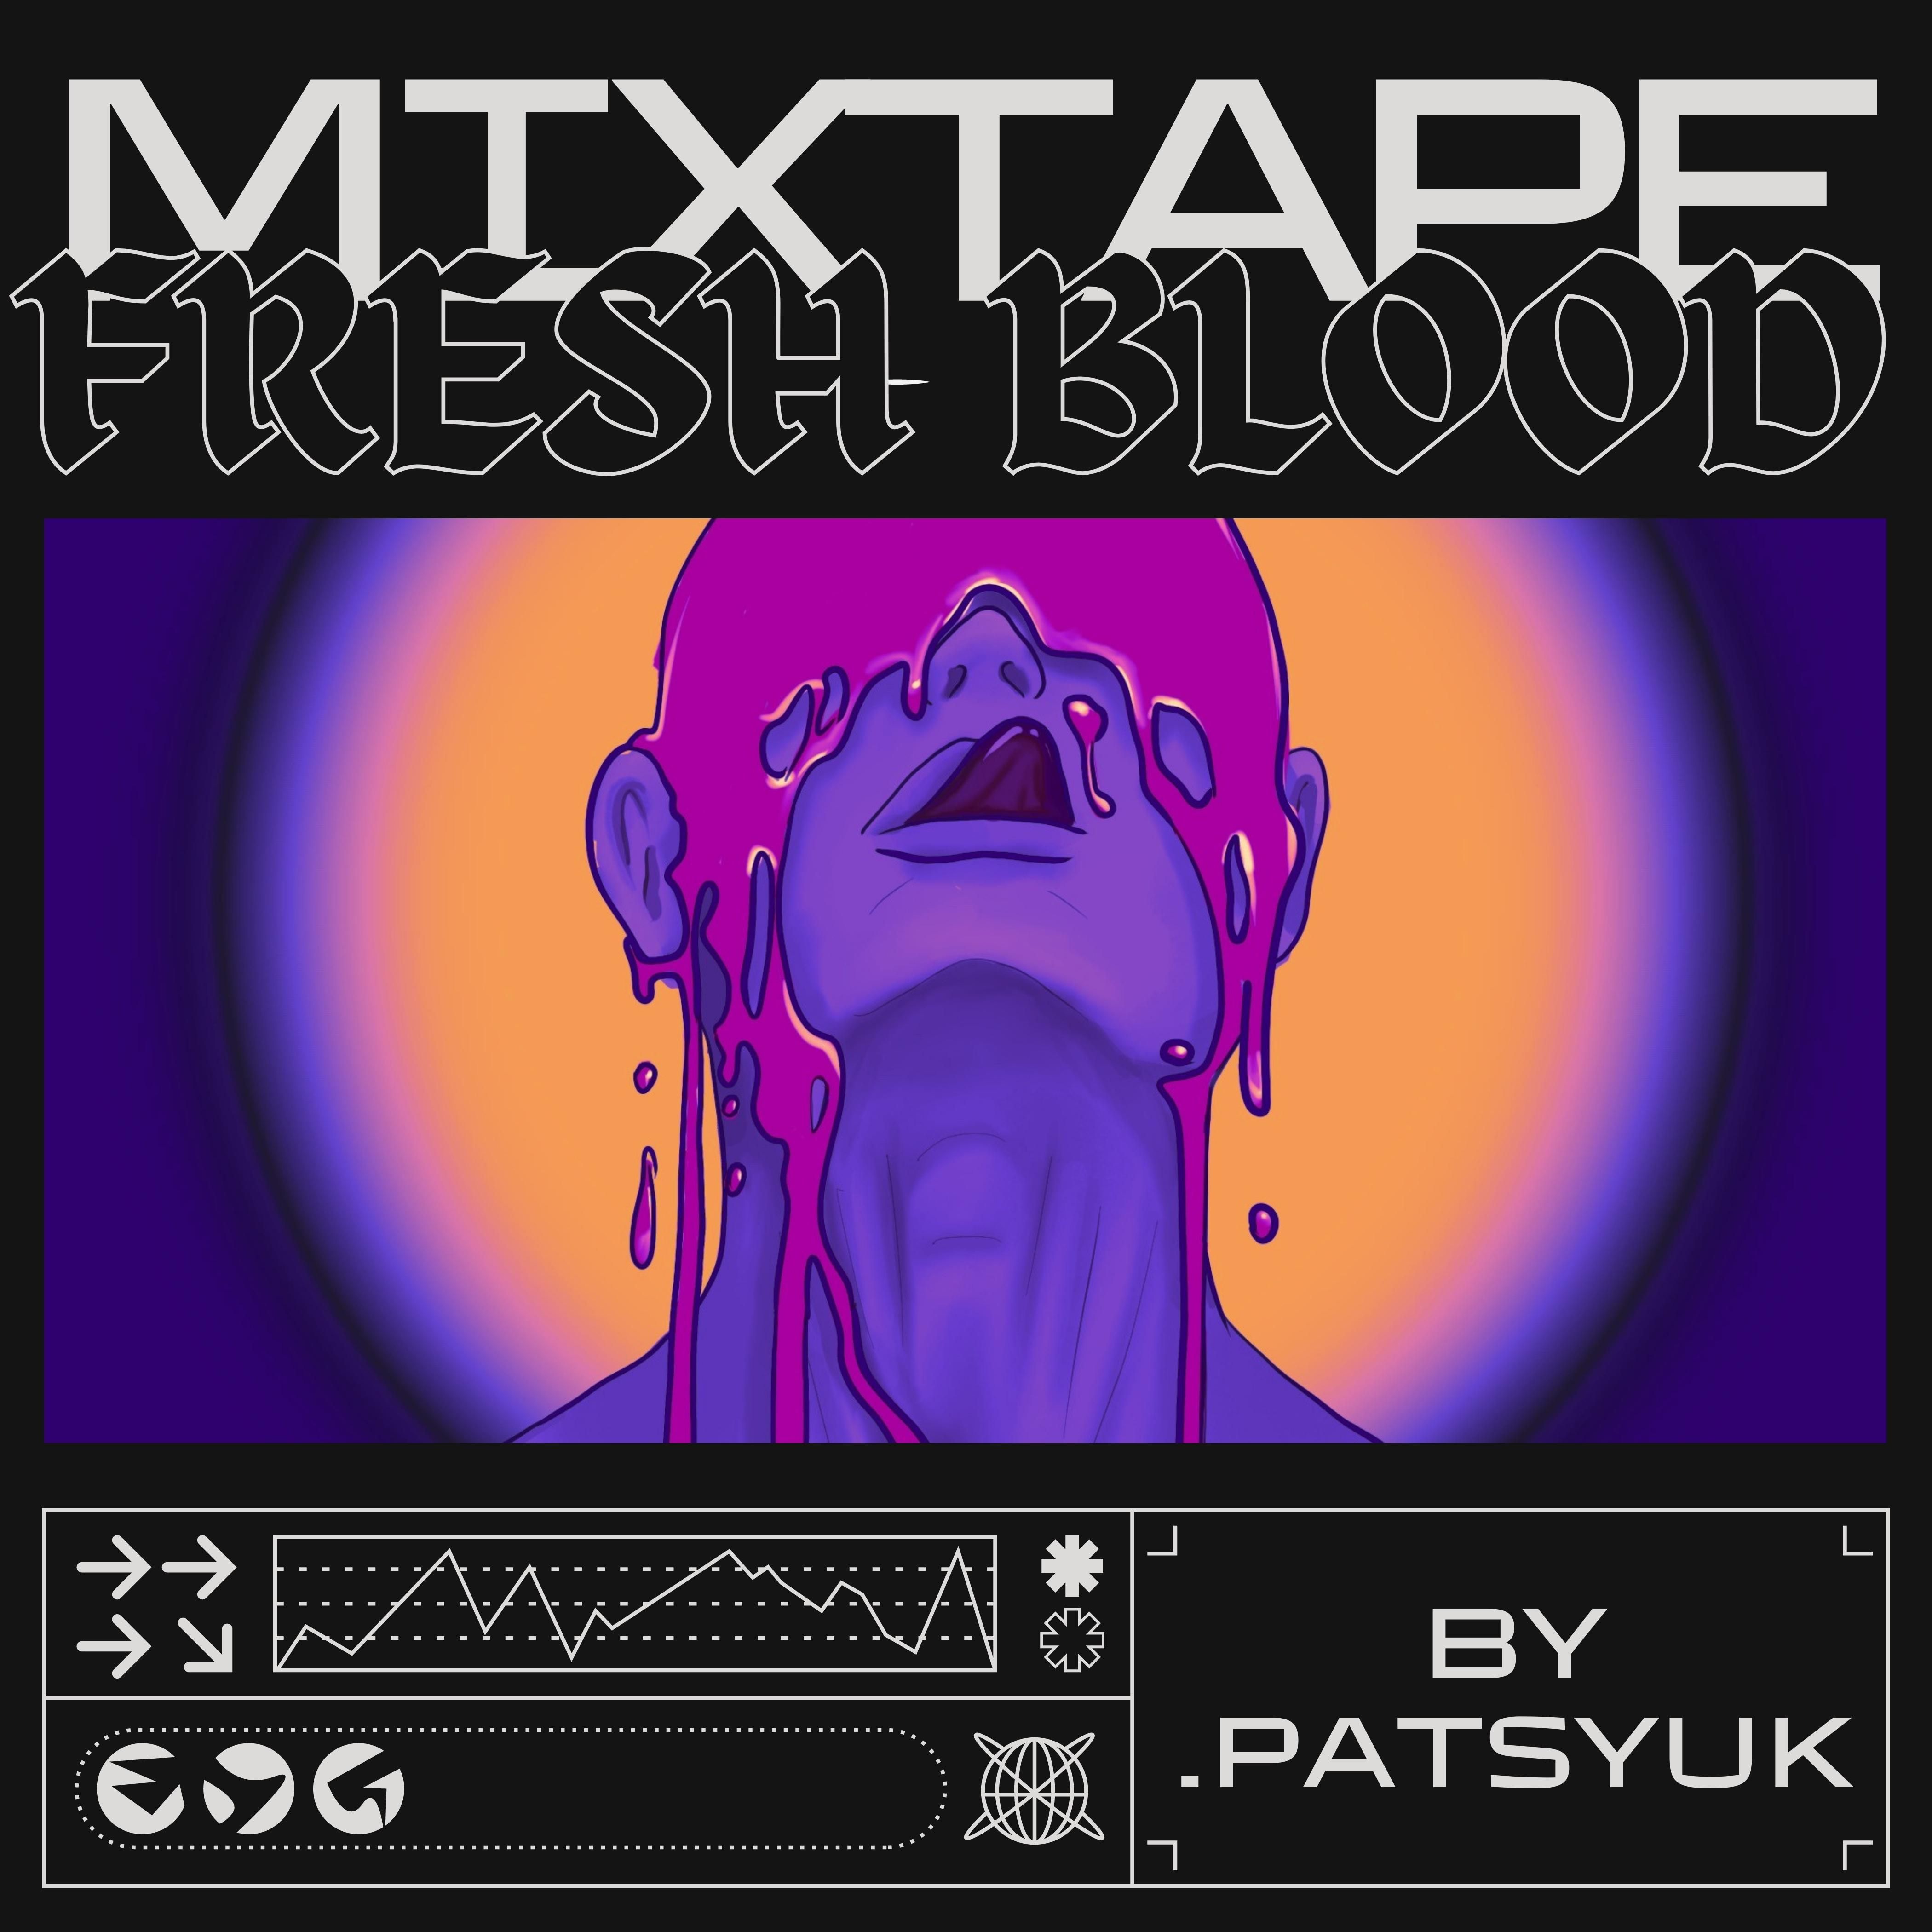 Skinuti Mixtape "FRESH BLOOD"